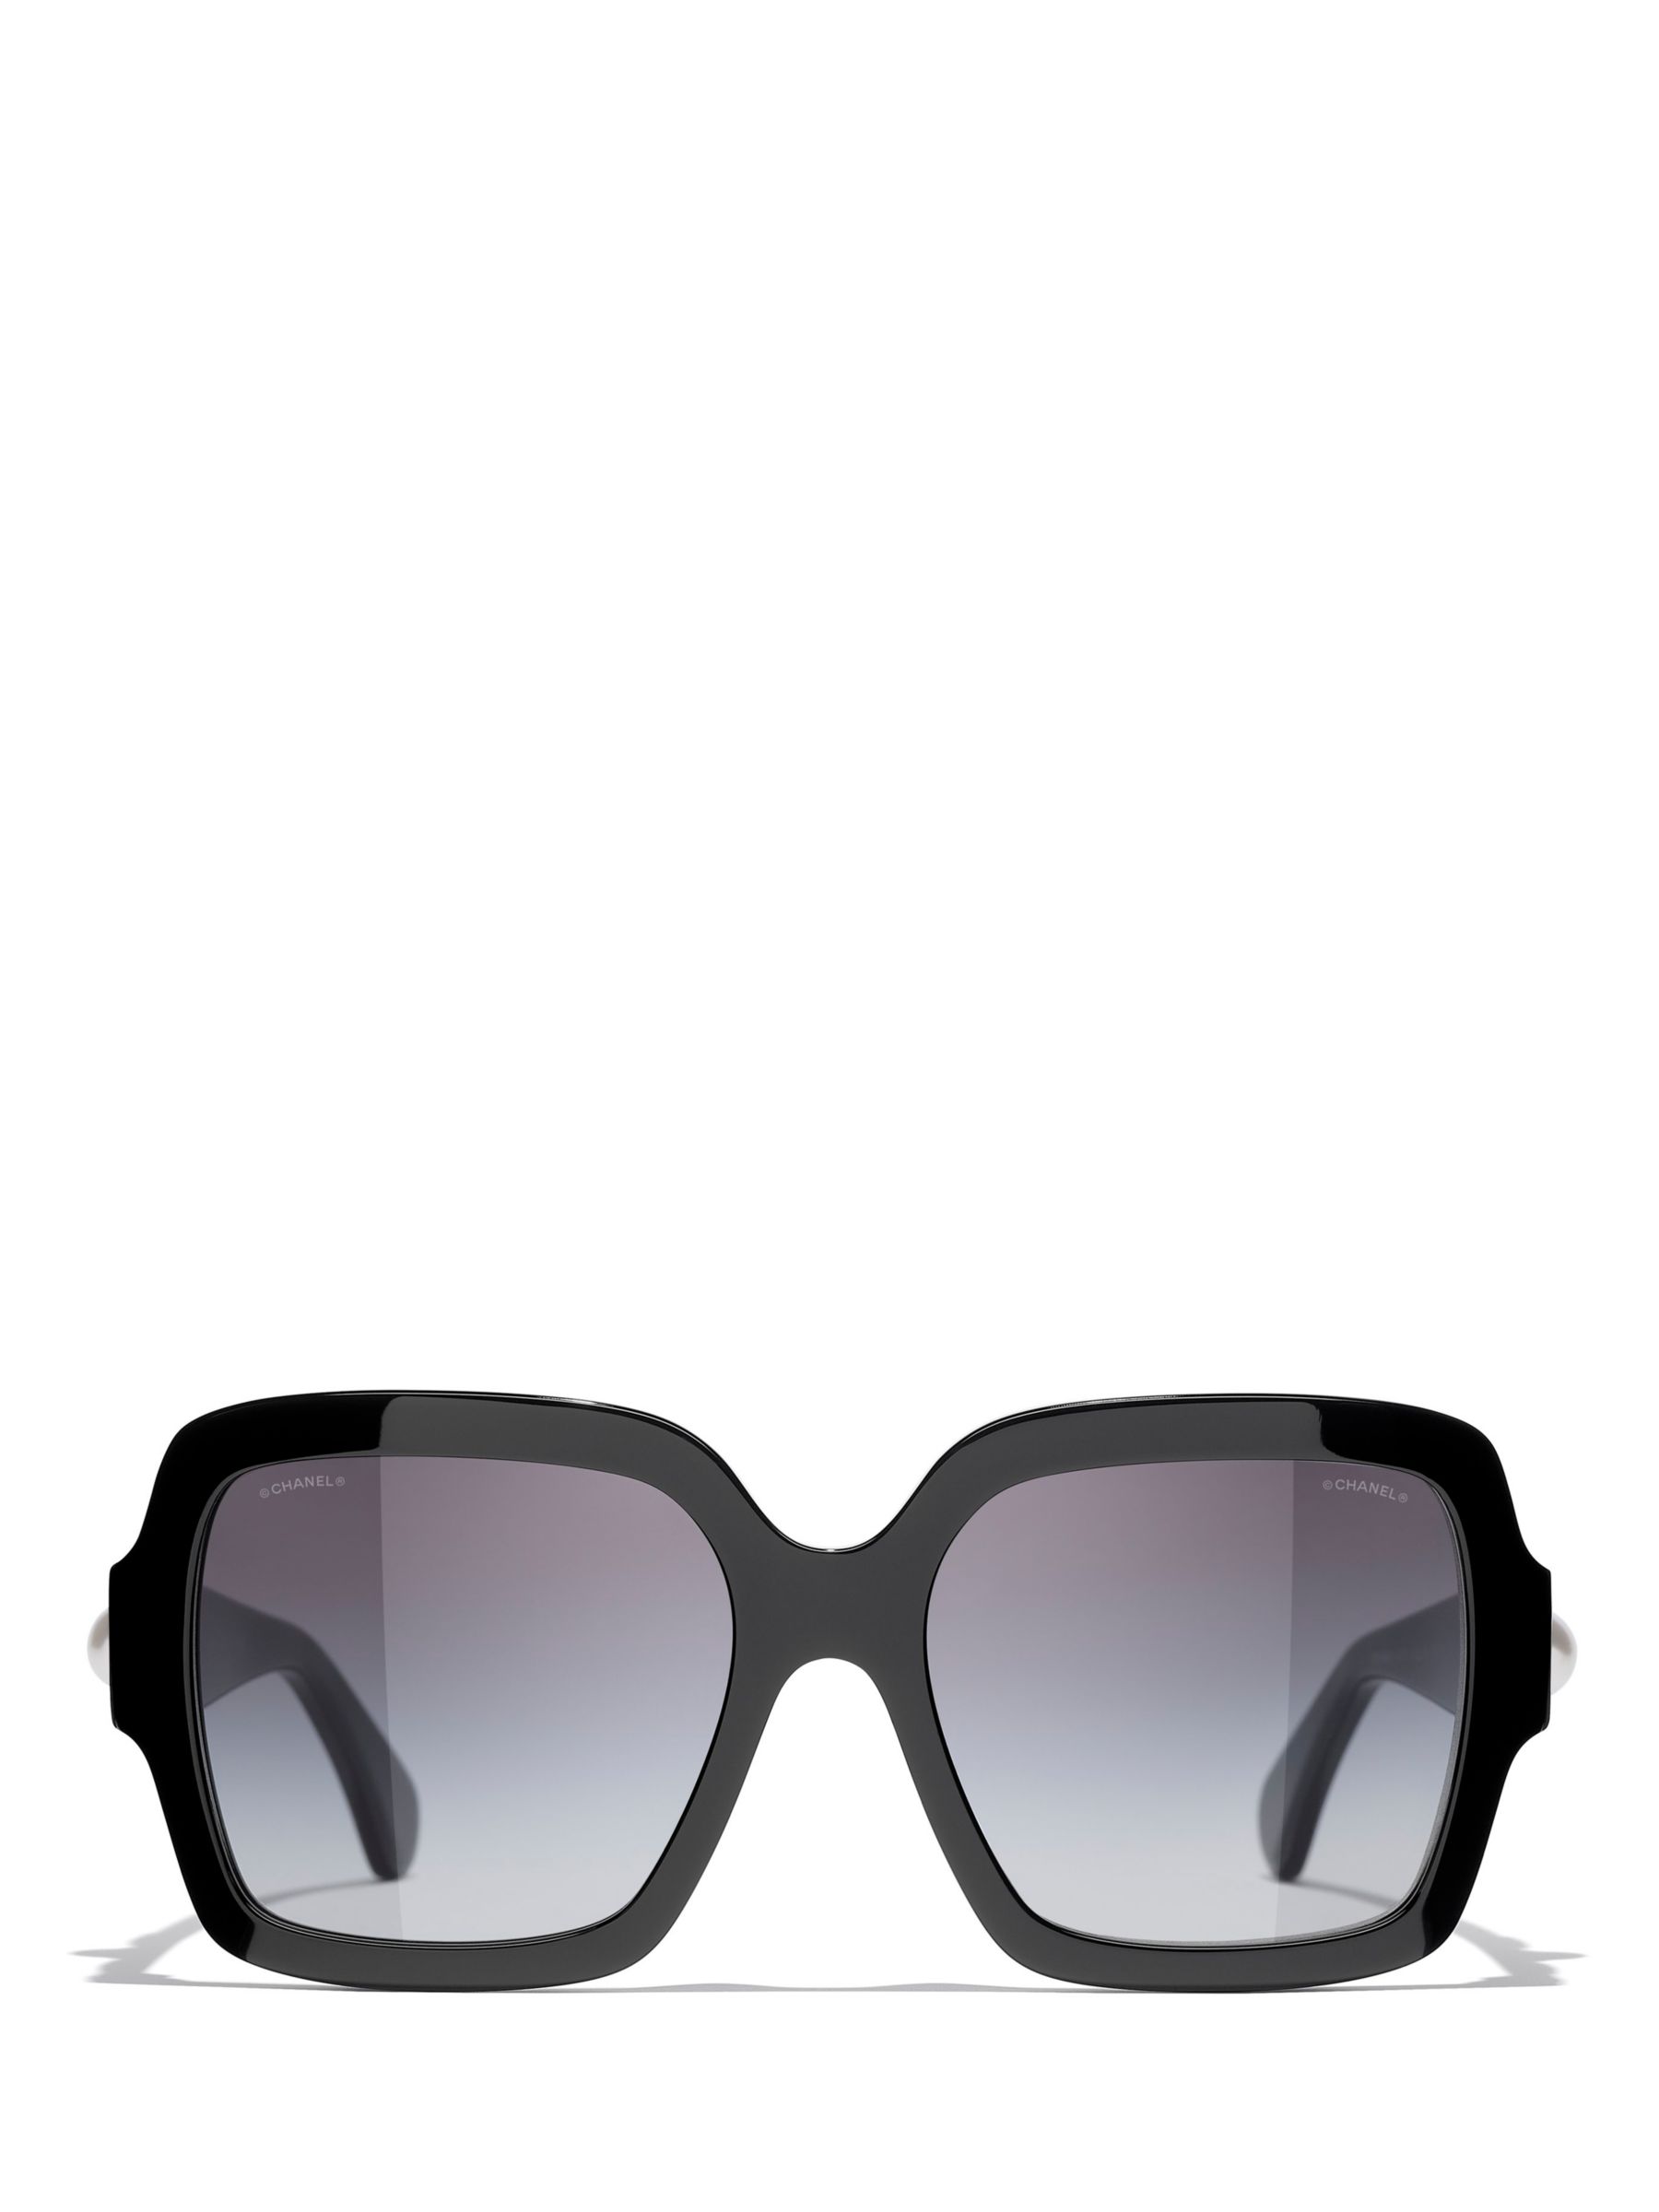 CHANEL #109 Sunglasses Square Sheip Plastic black brown Women's